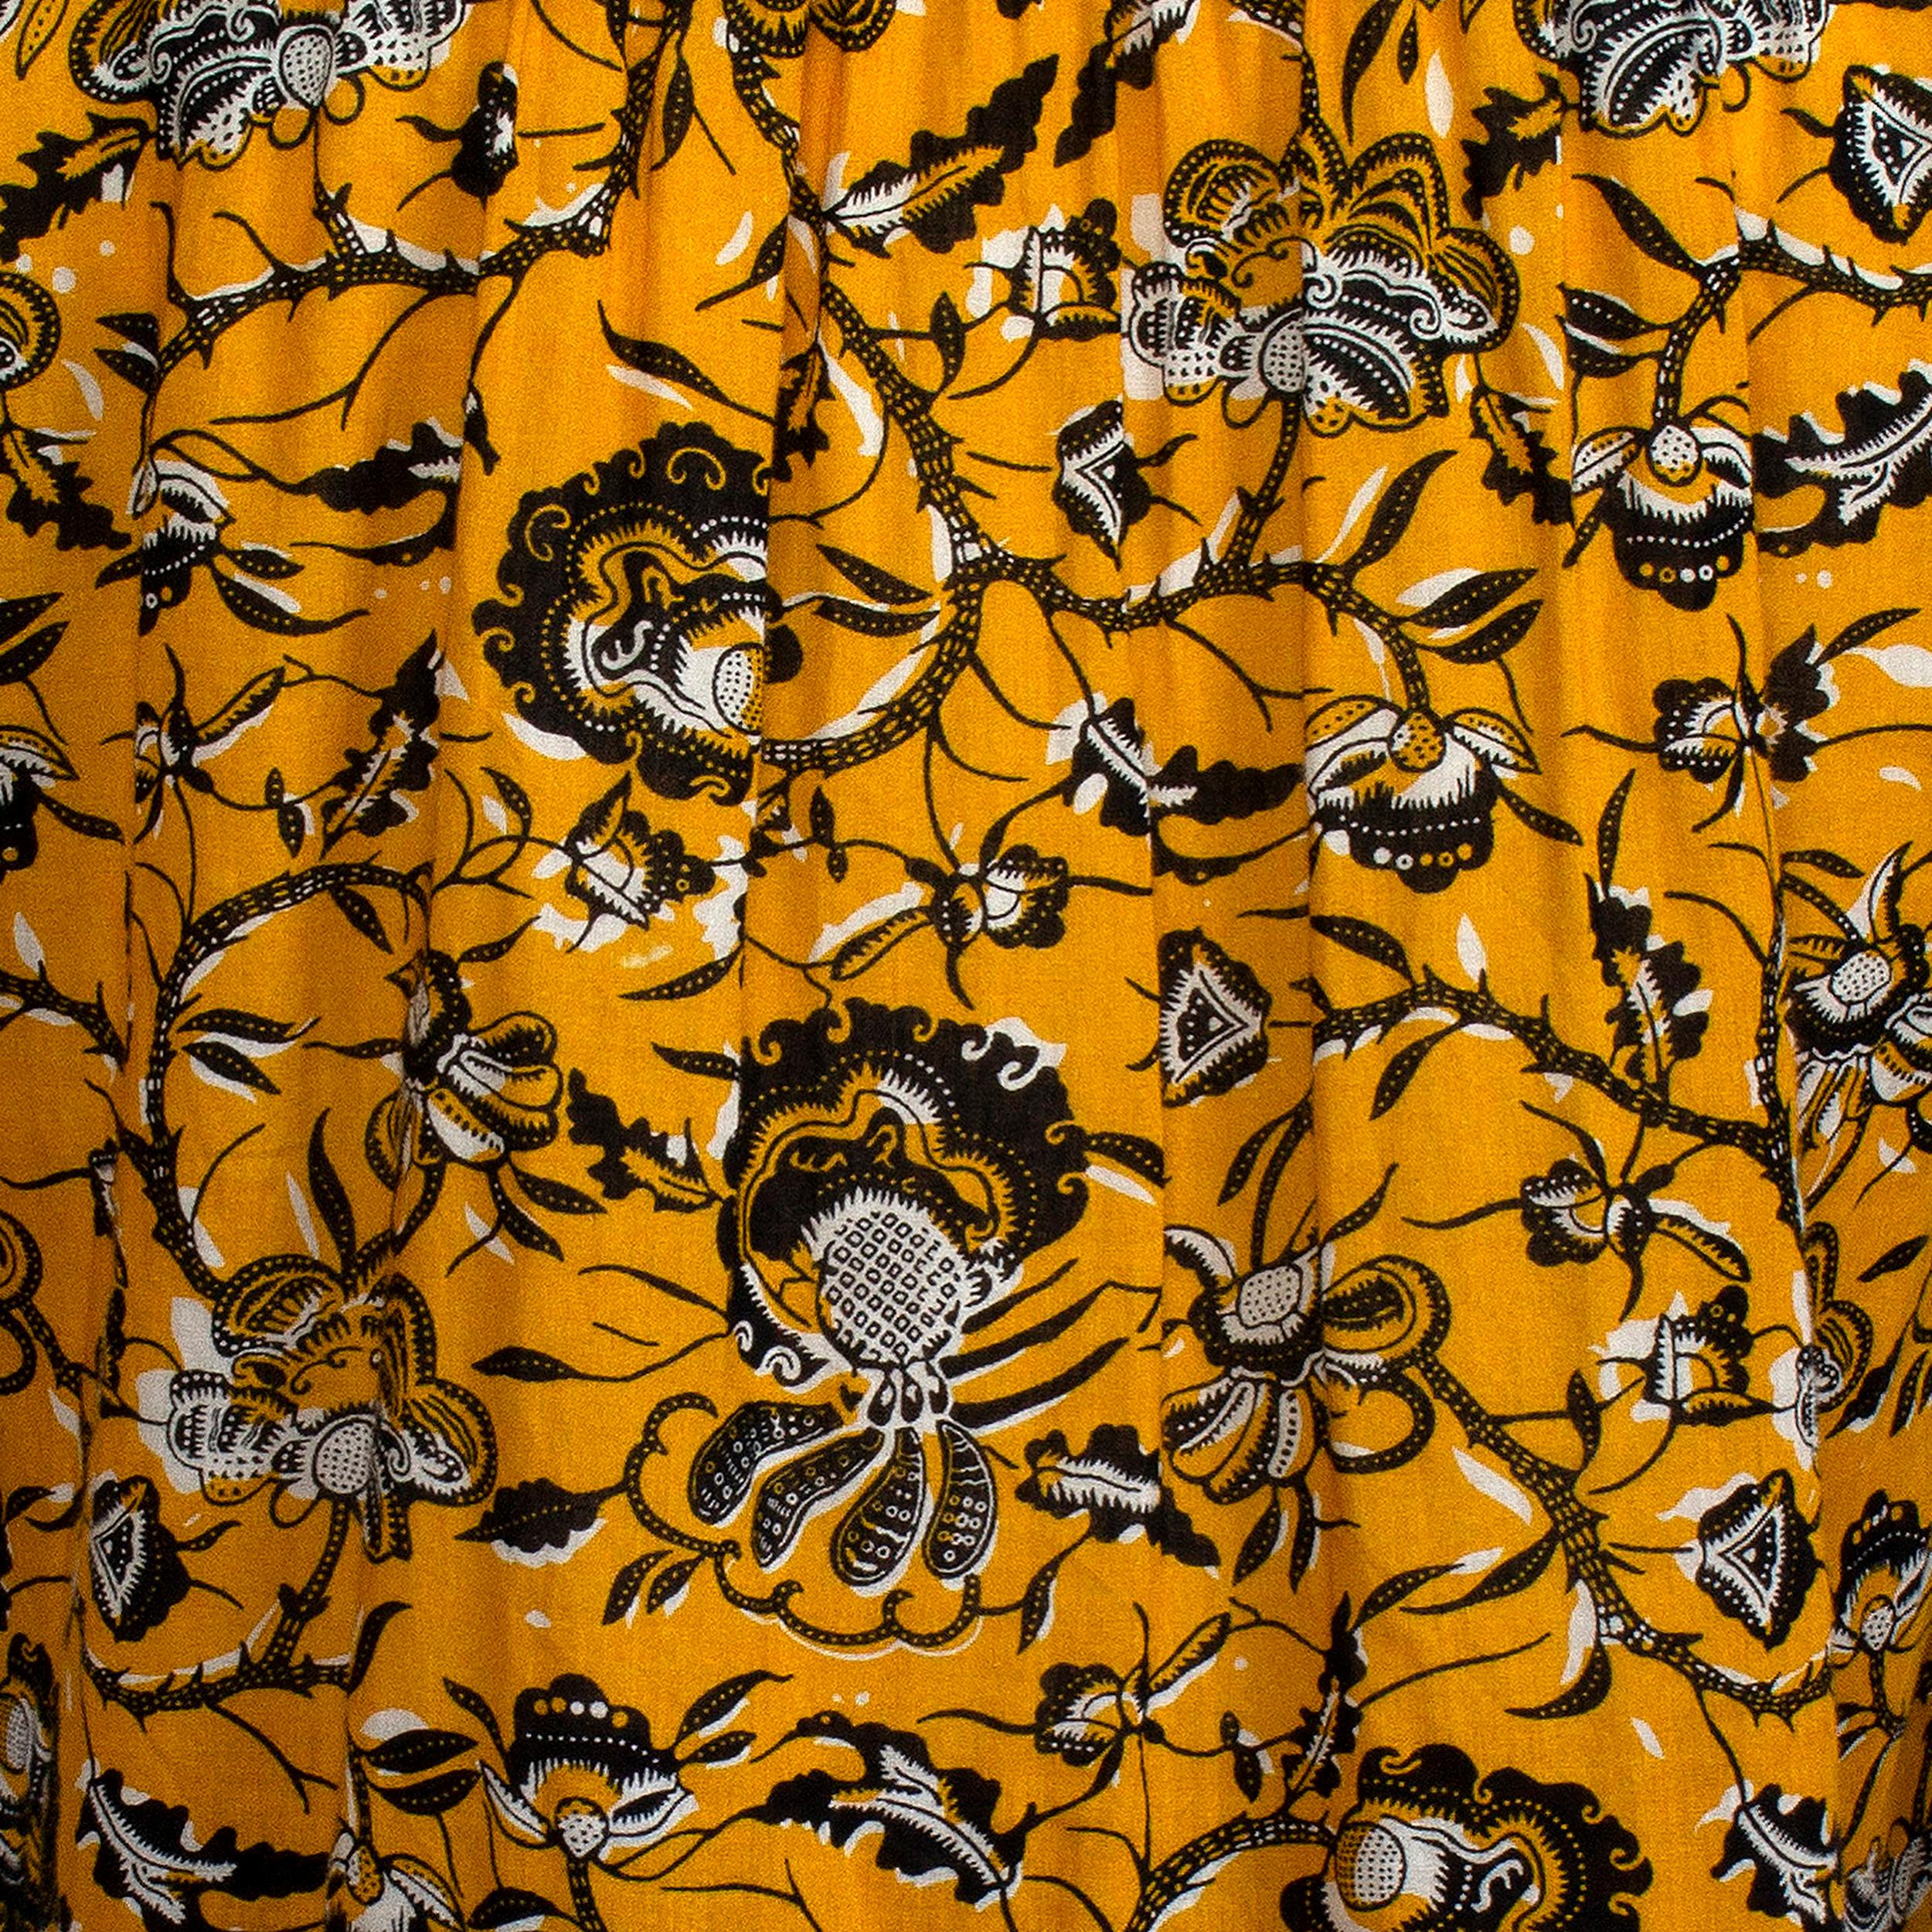 Brown Isabel Marant Etoile - Shorts - Cotton - Yellow, Black + White Floral Print 